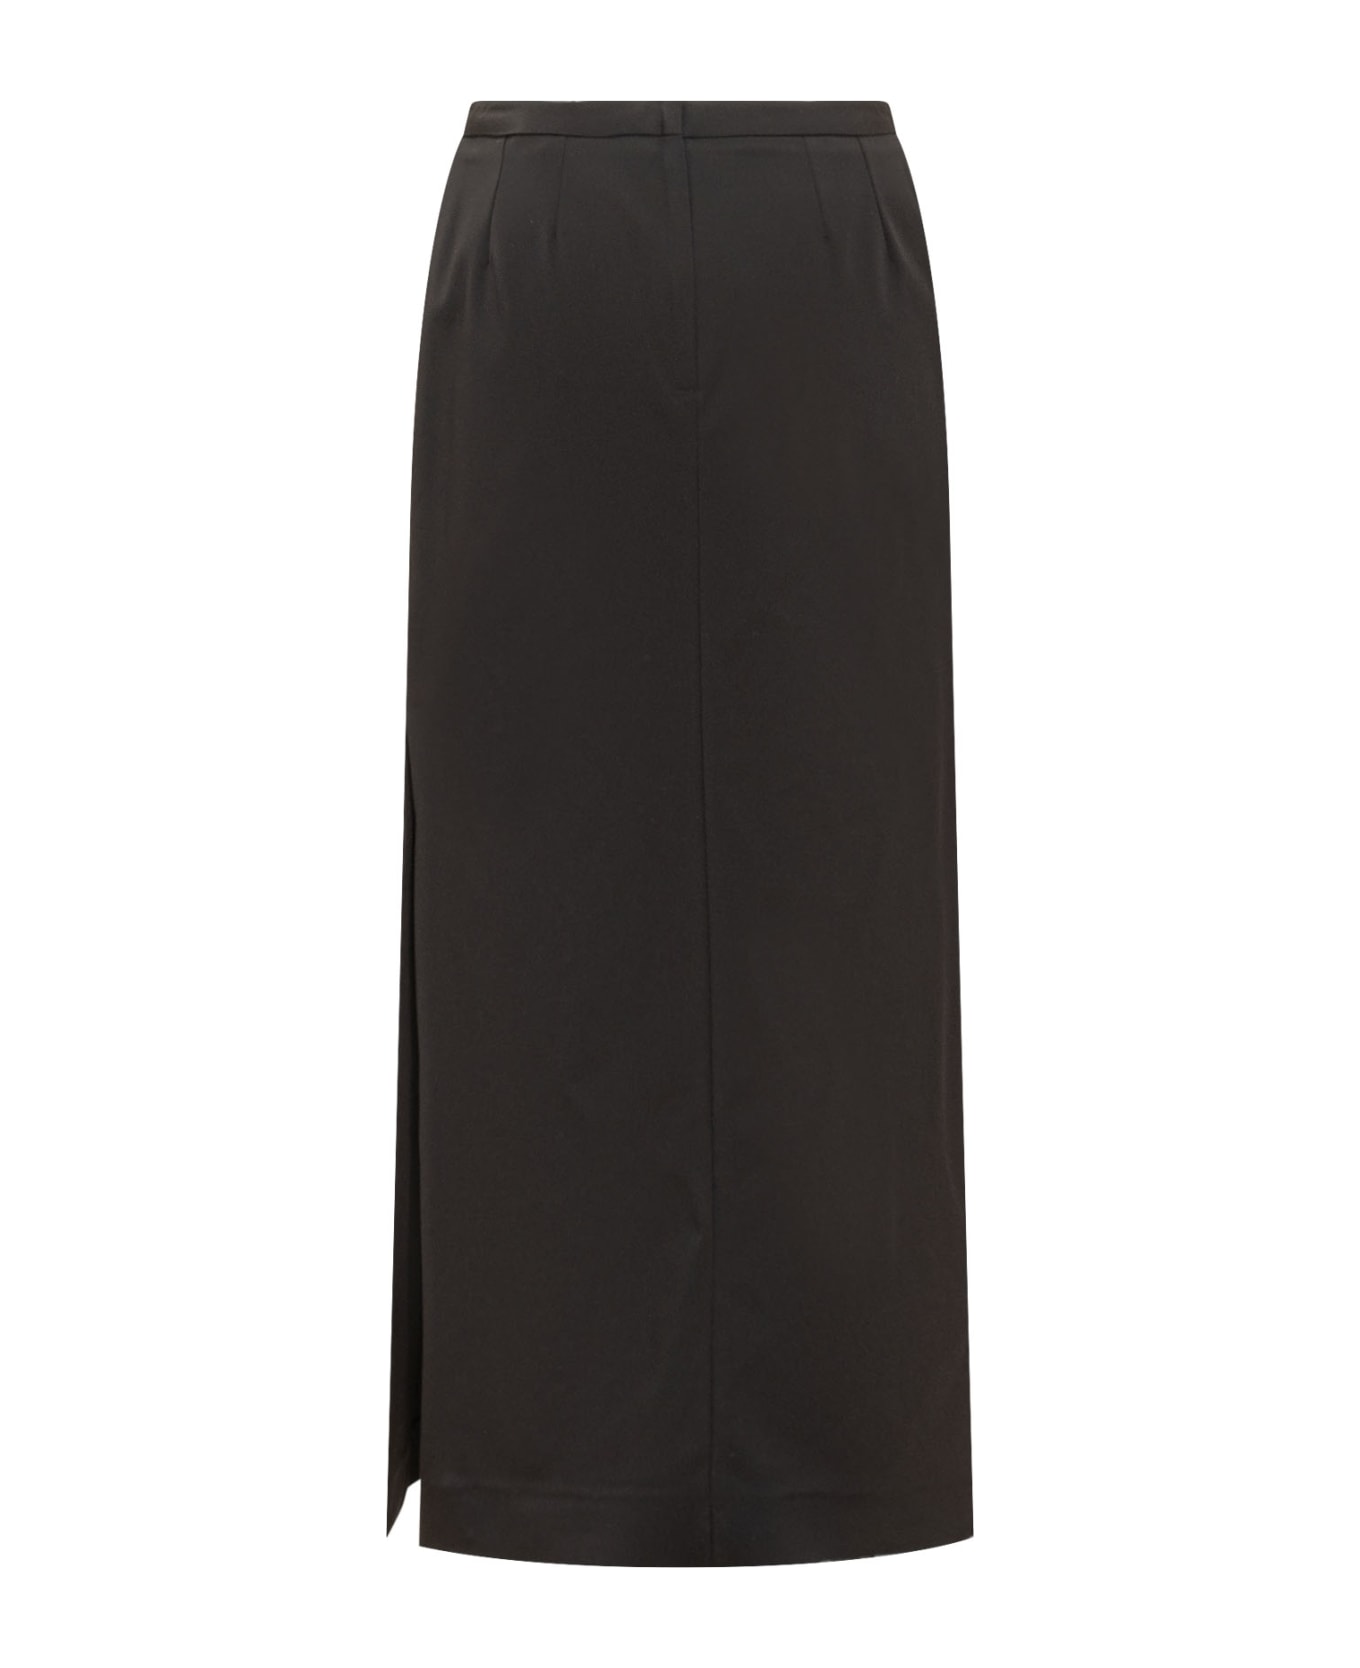 Dolce & Gabbana Longuette In Technical Fabric - NERO スカート